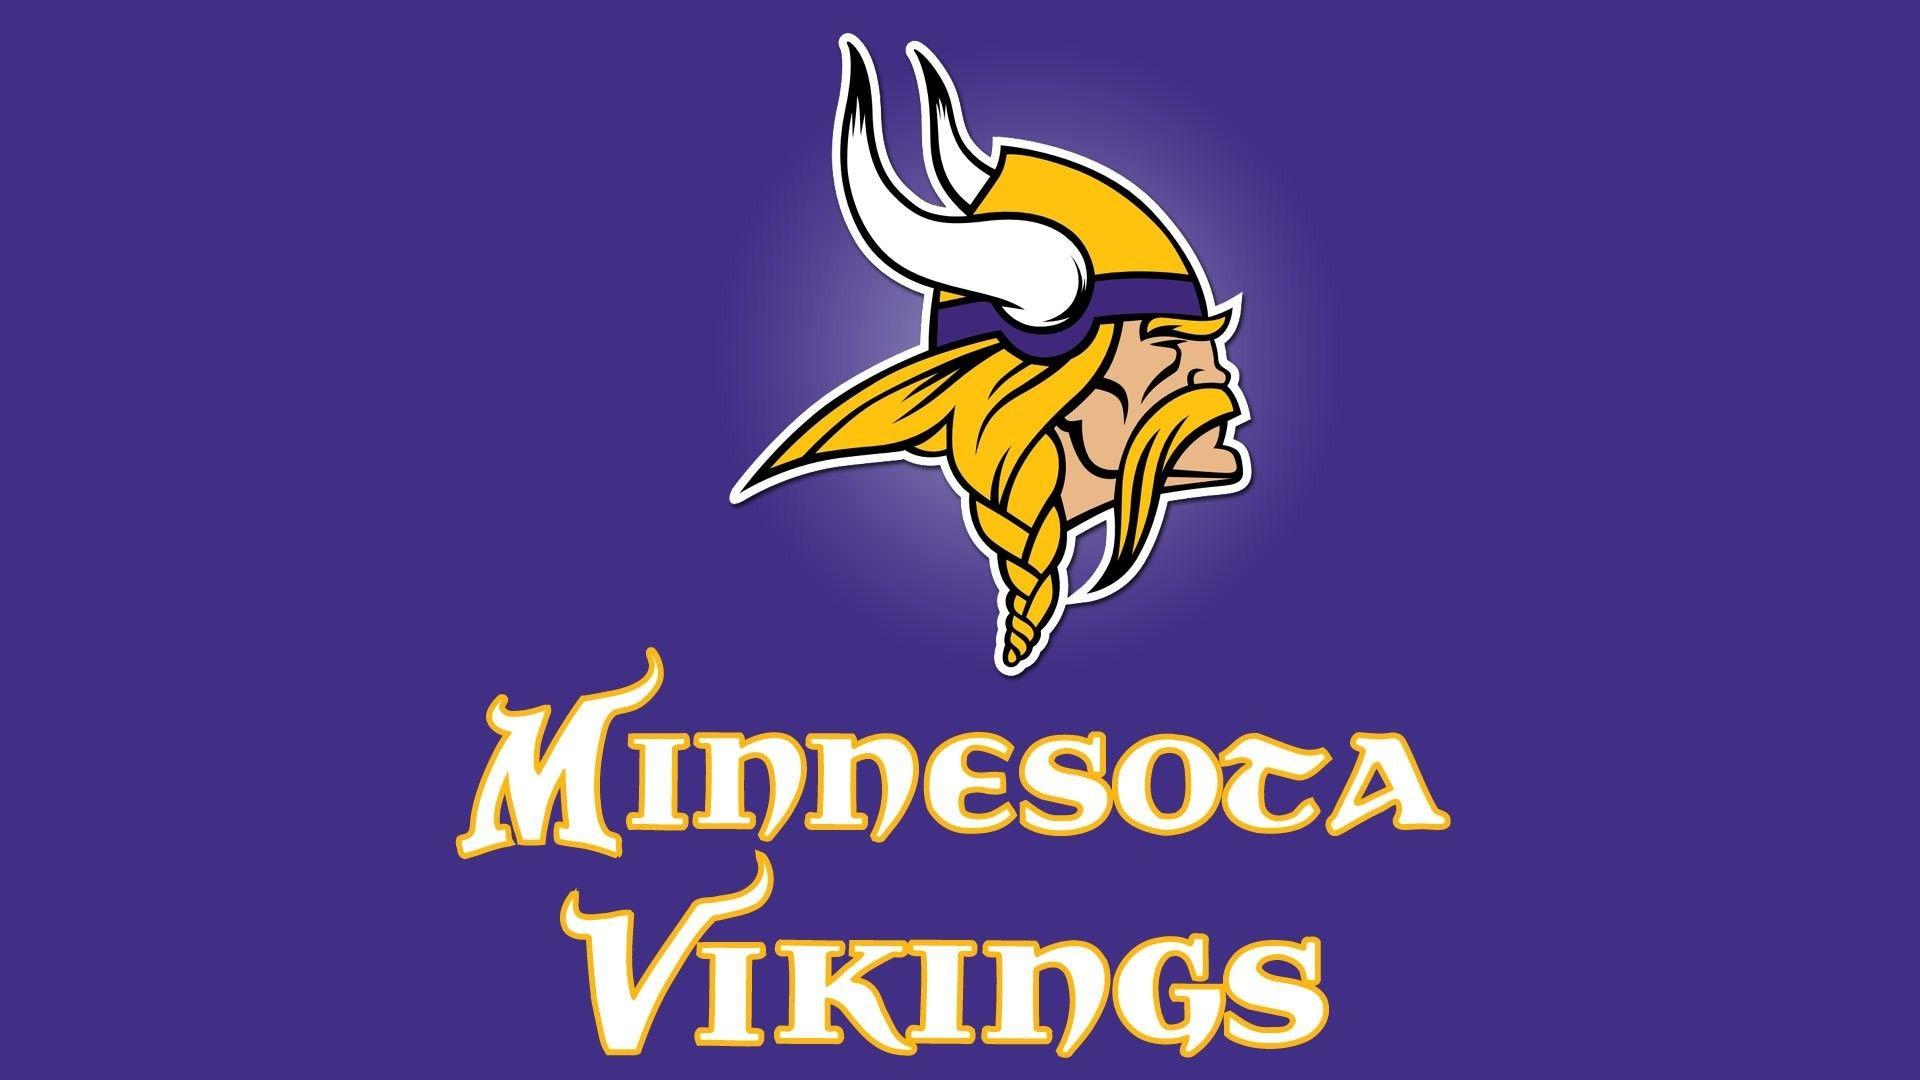 Minnesota Vikings Logo Image Wallpaper